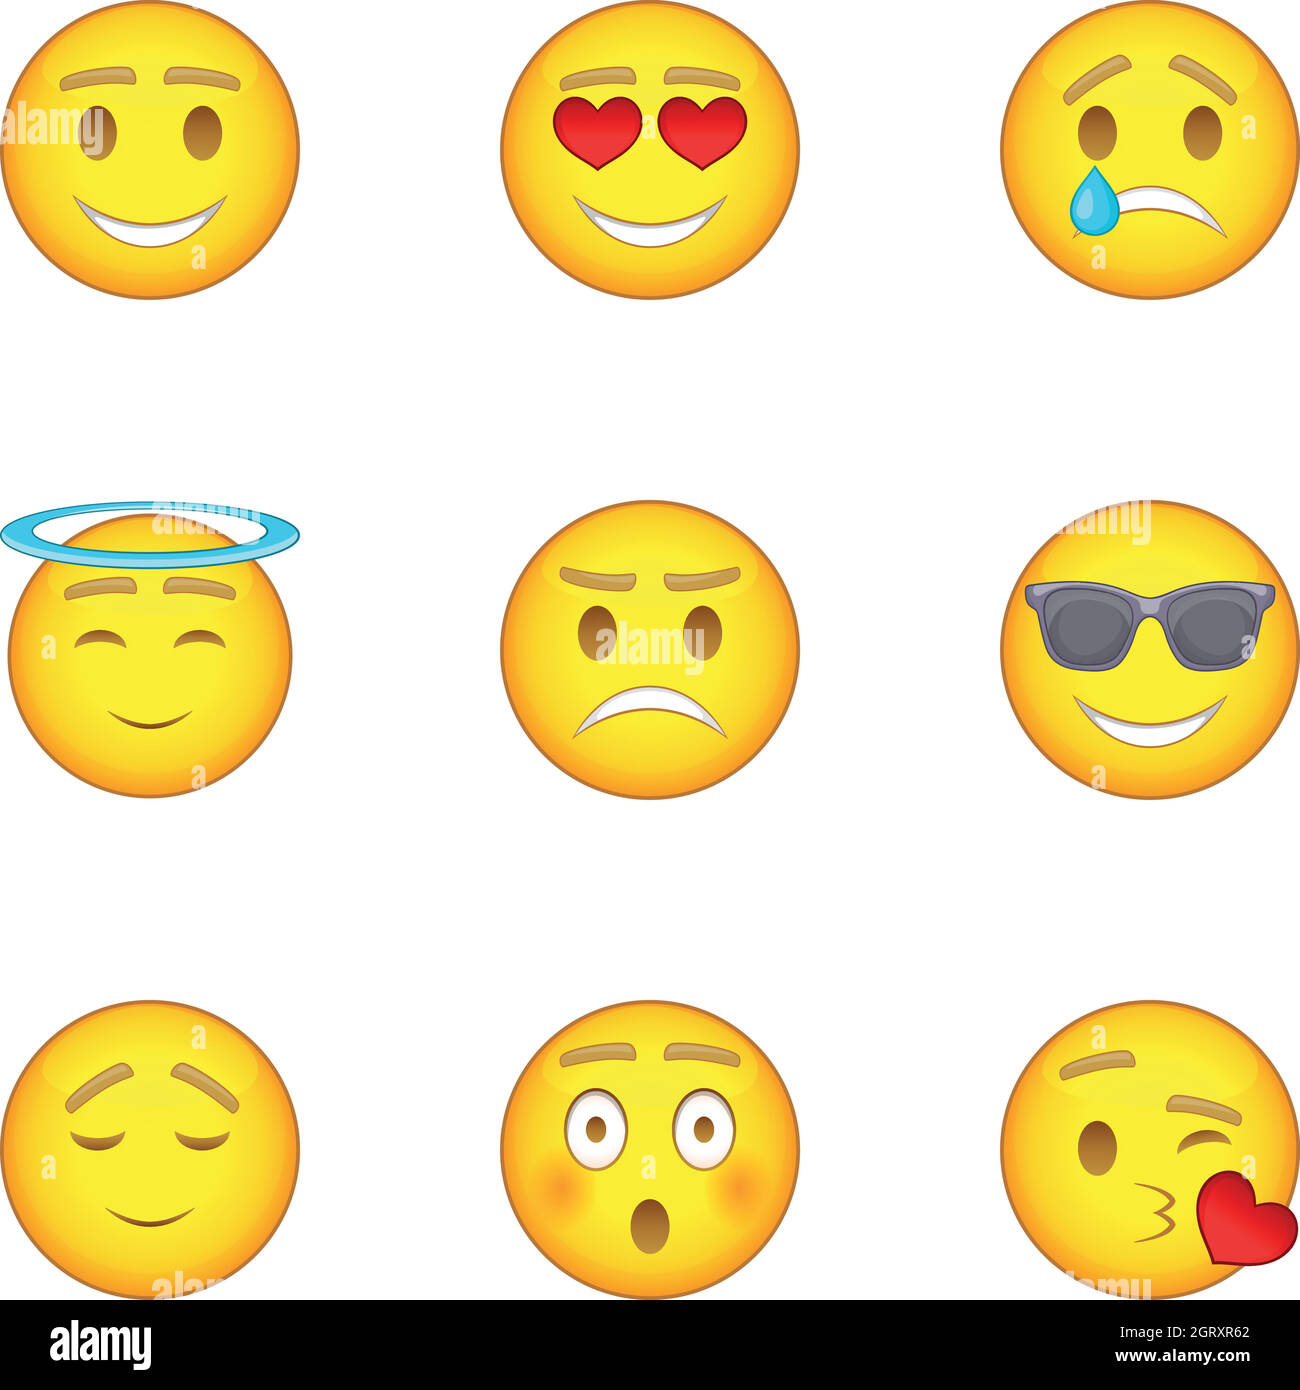 Emoji icons set, cartoon style Stock Vector